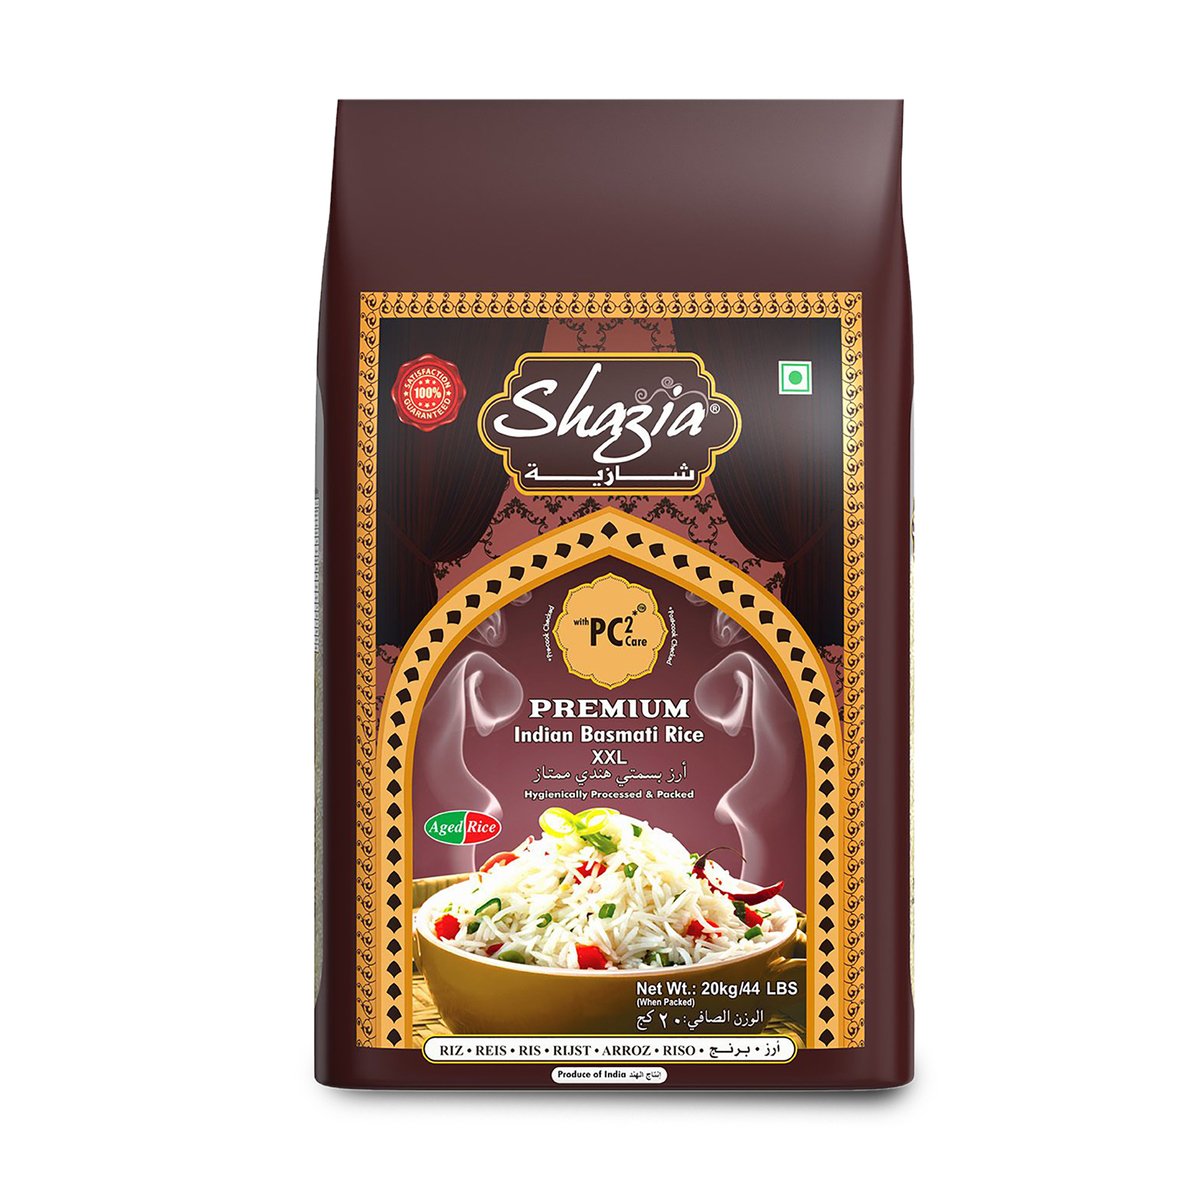 Shazia Premium Indian Basmati Rice 1121 20kg